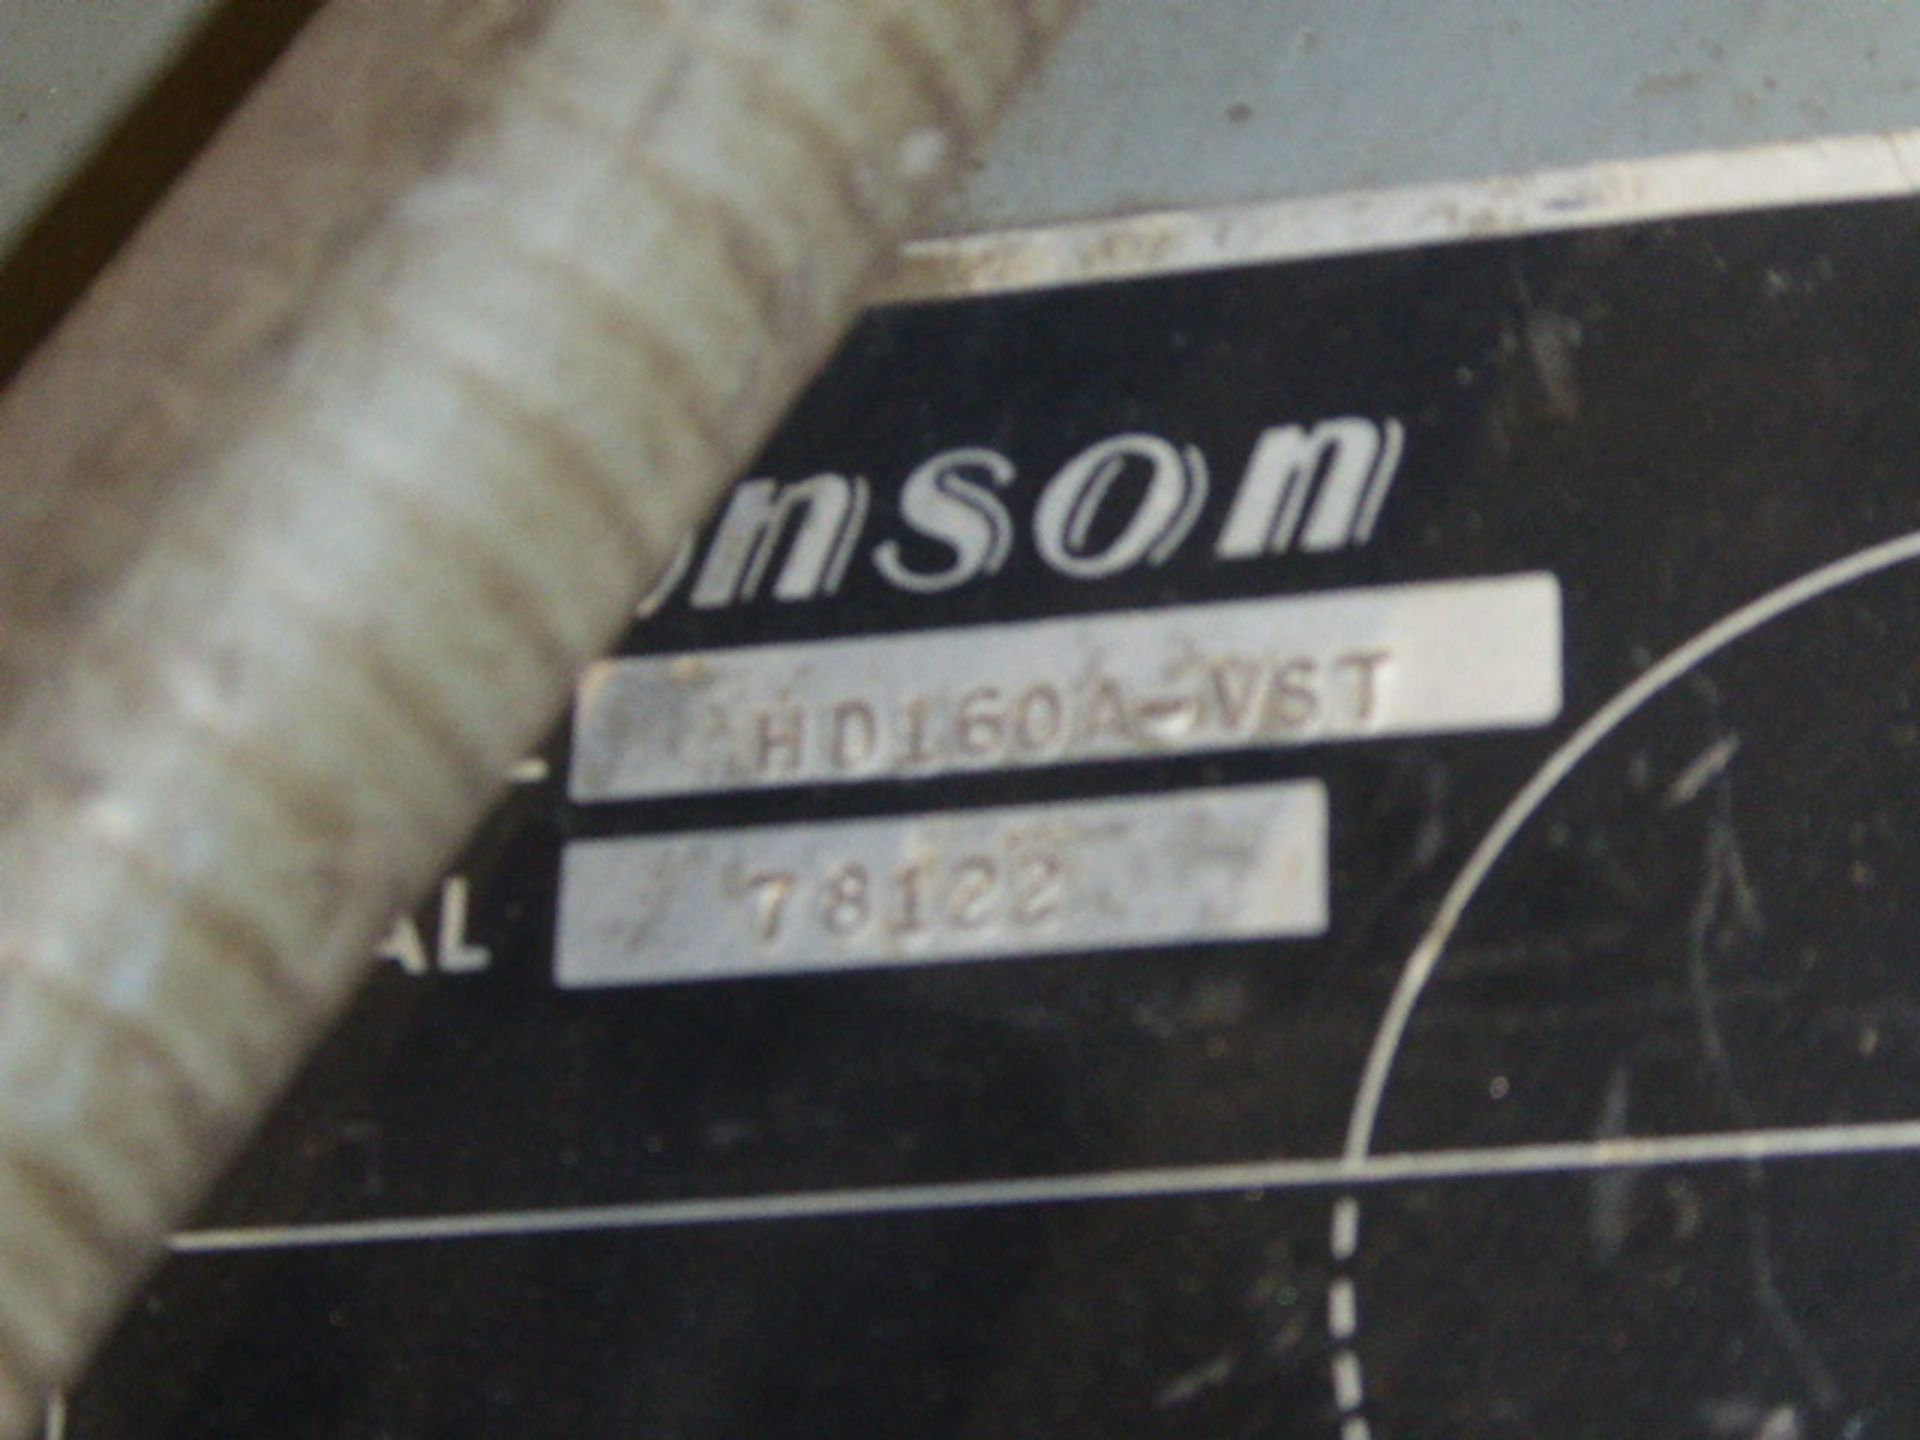 Aronson Welding Positioner, 16,000# Capacity, m/n HD160A-VST, s/n 78122 - Image 4 of 4